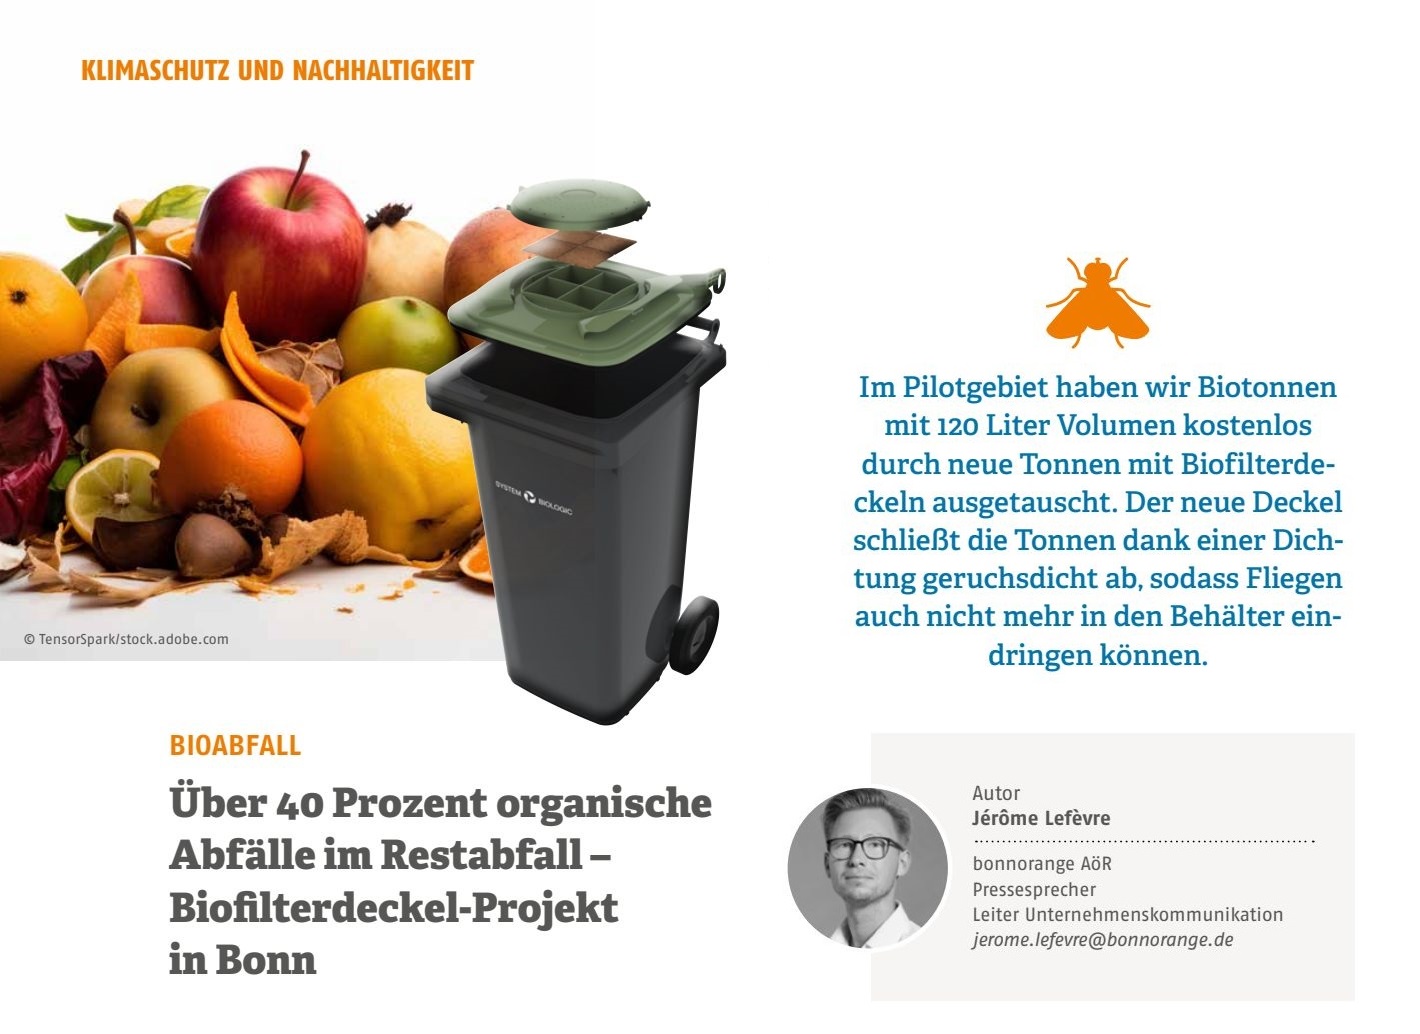 VKS News: Over 40% organic waste in residual waste - bio-filterlid project in Bonn